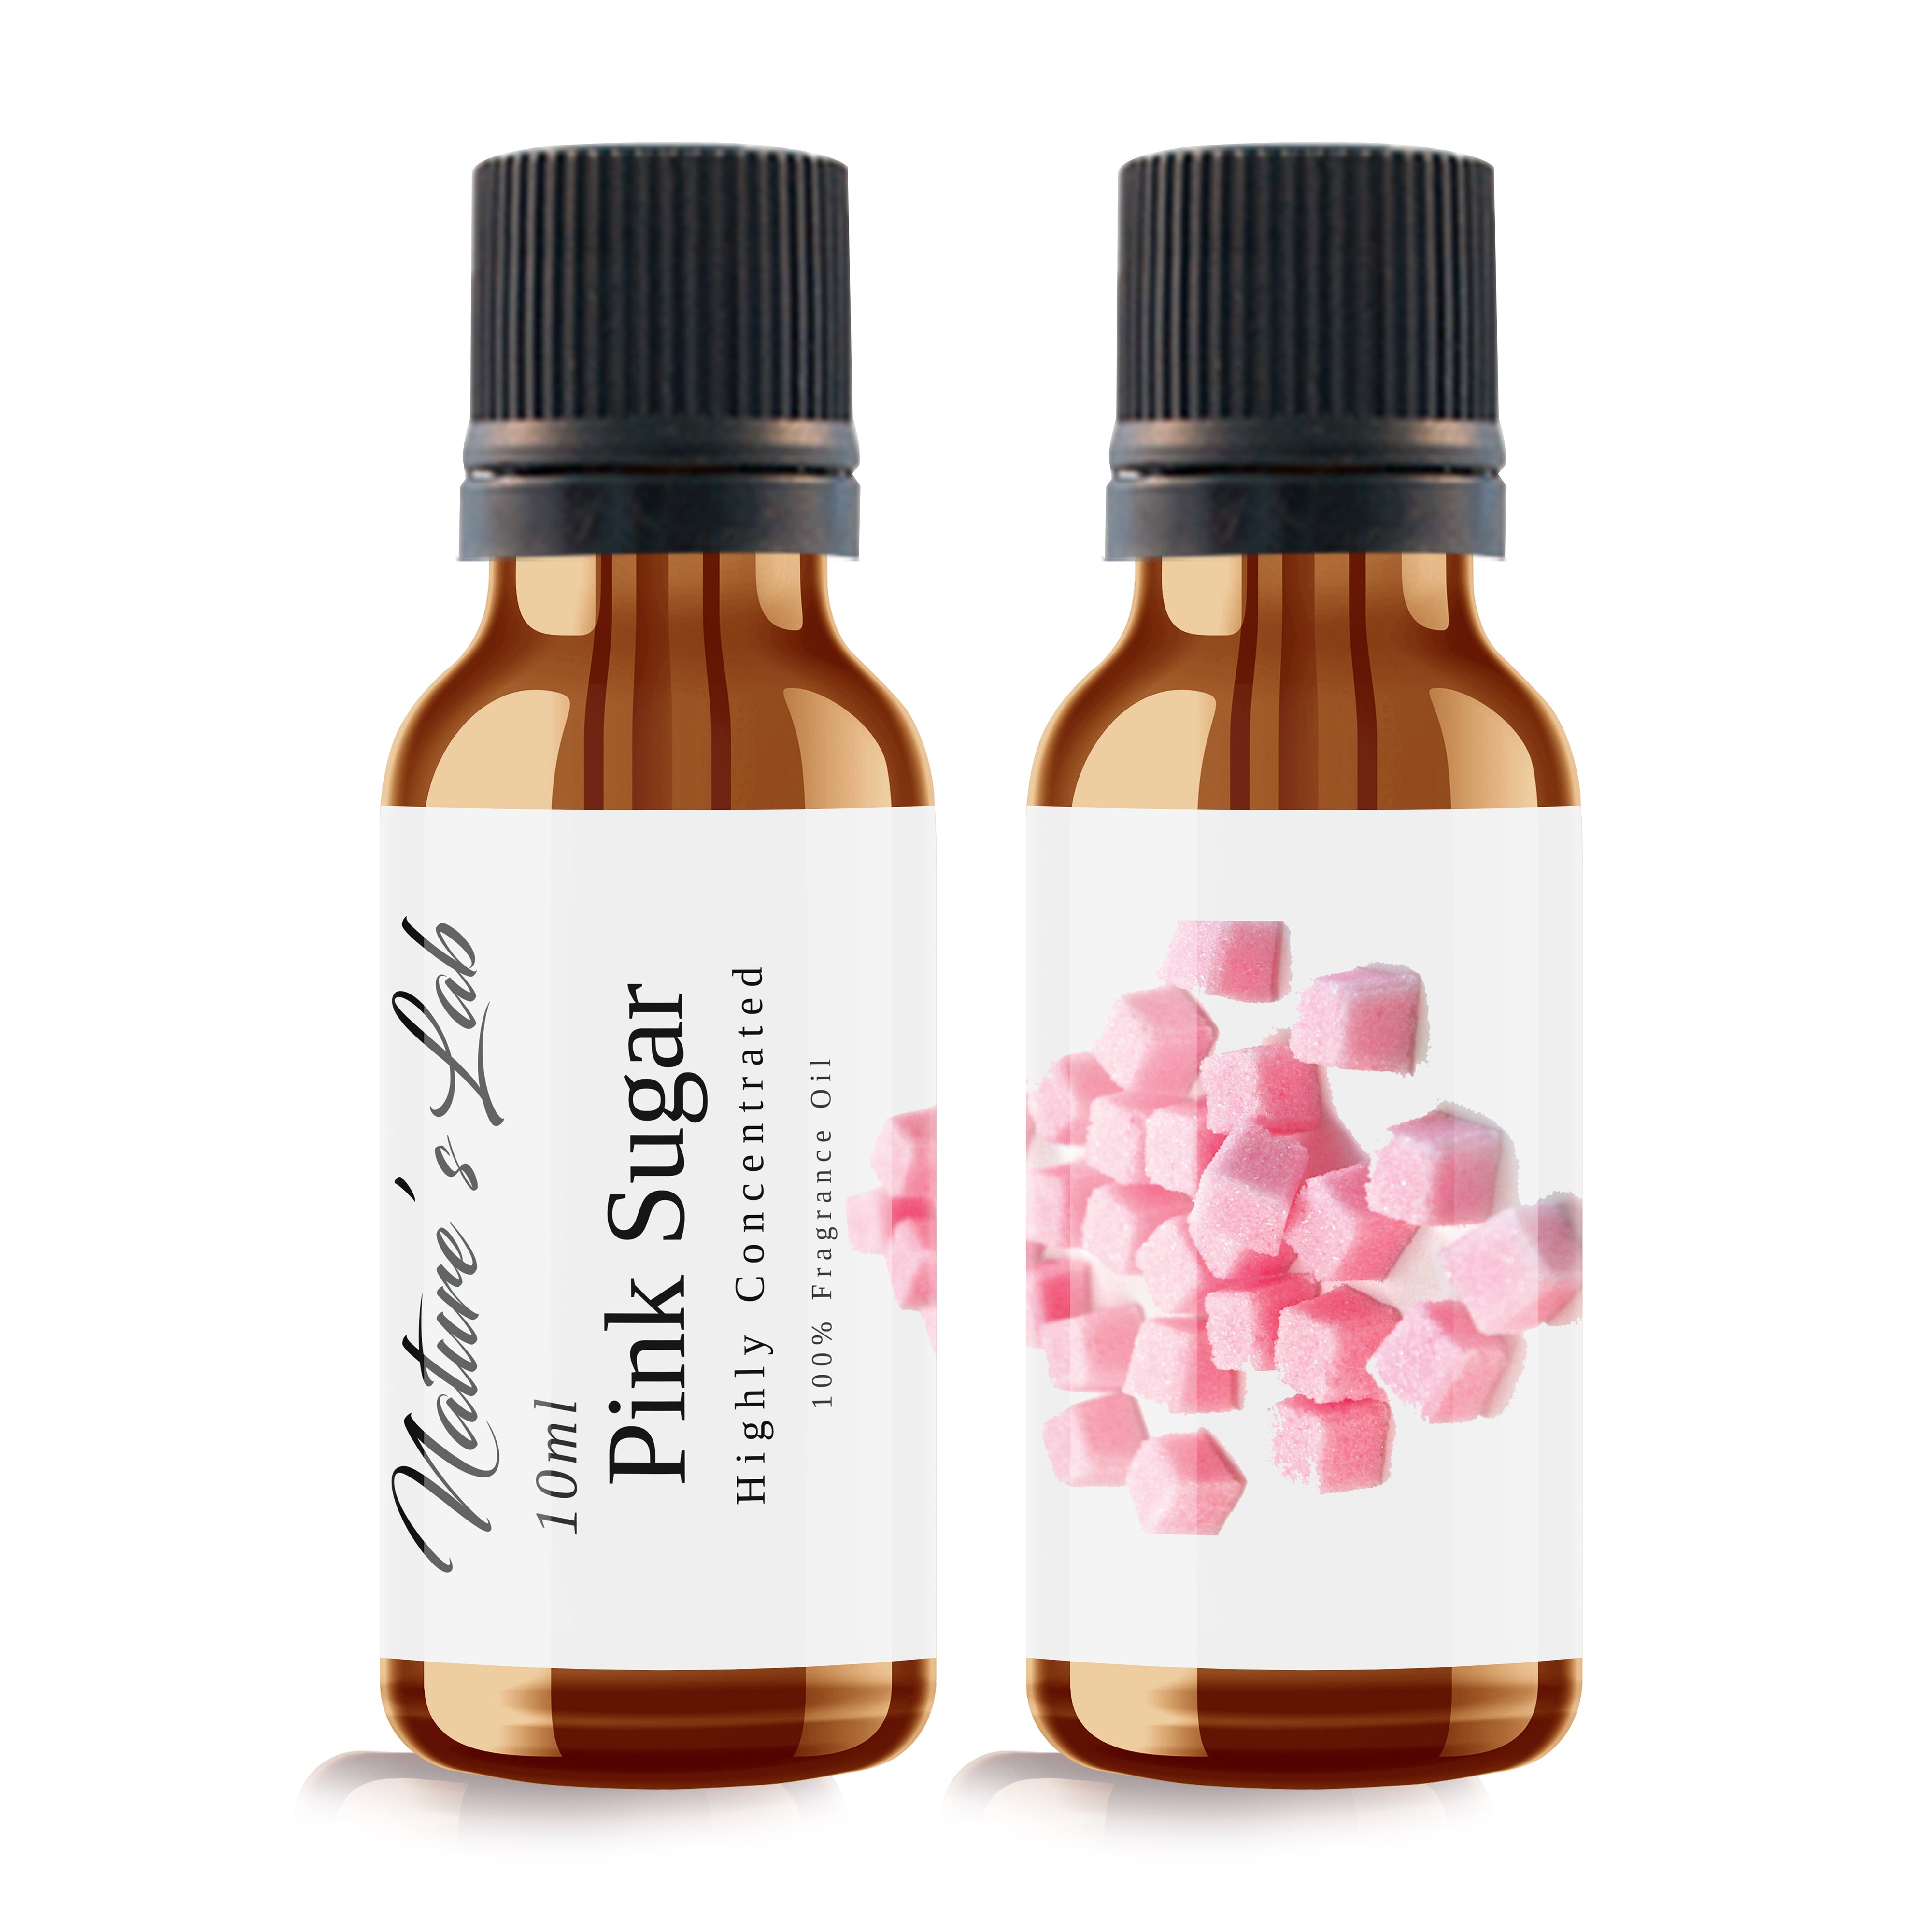 Unisex Pink Sugar Perfume Oil - Luxury & Long-lasting Fragrance